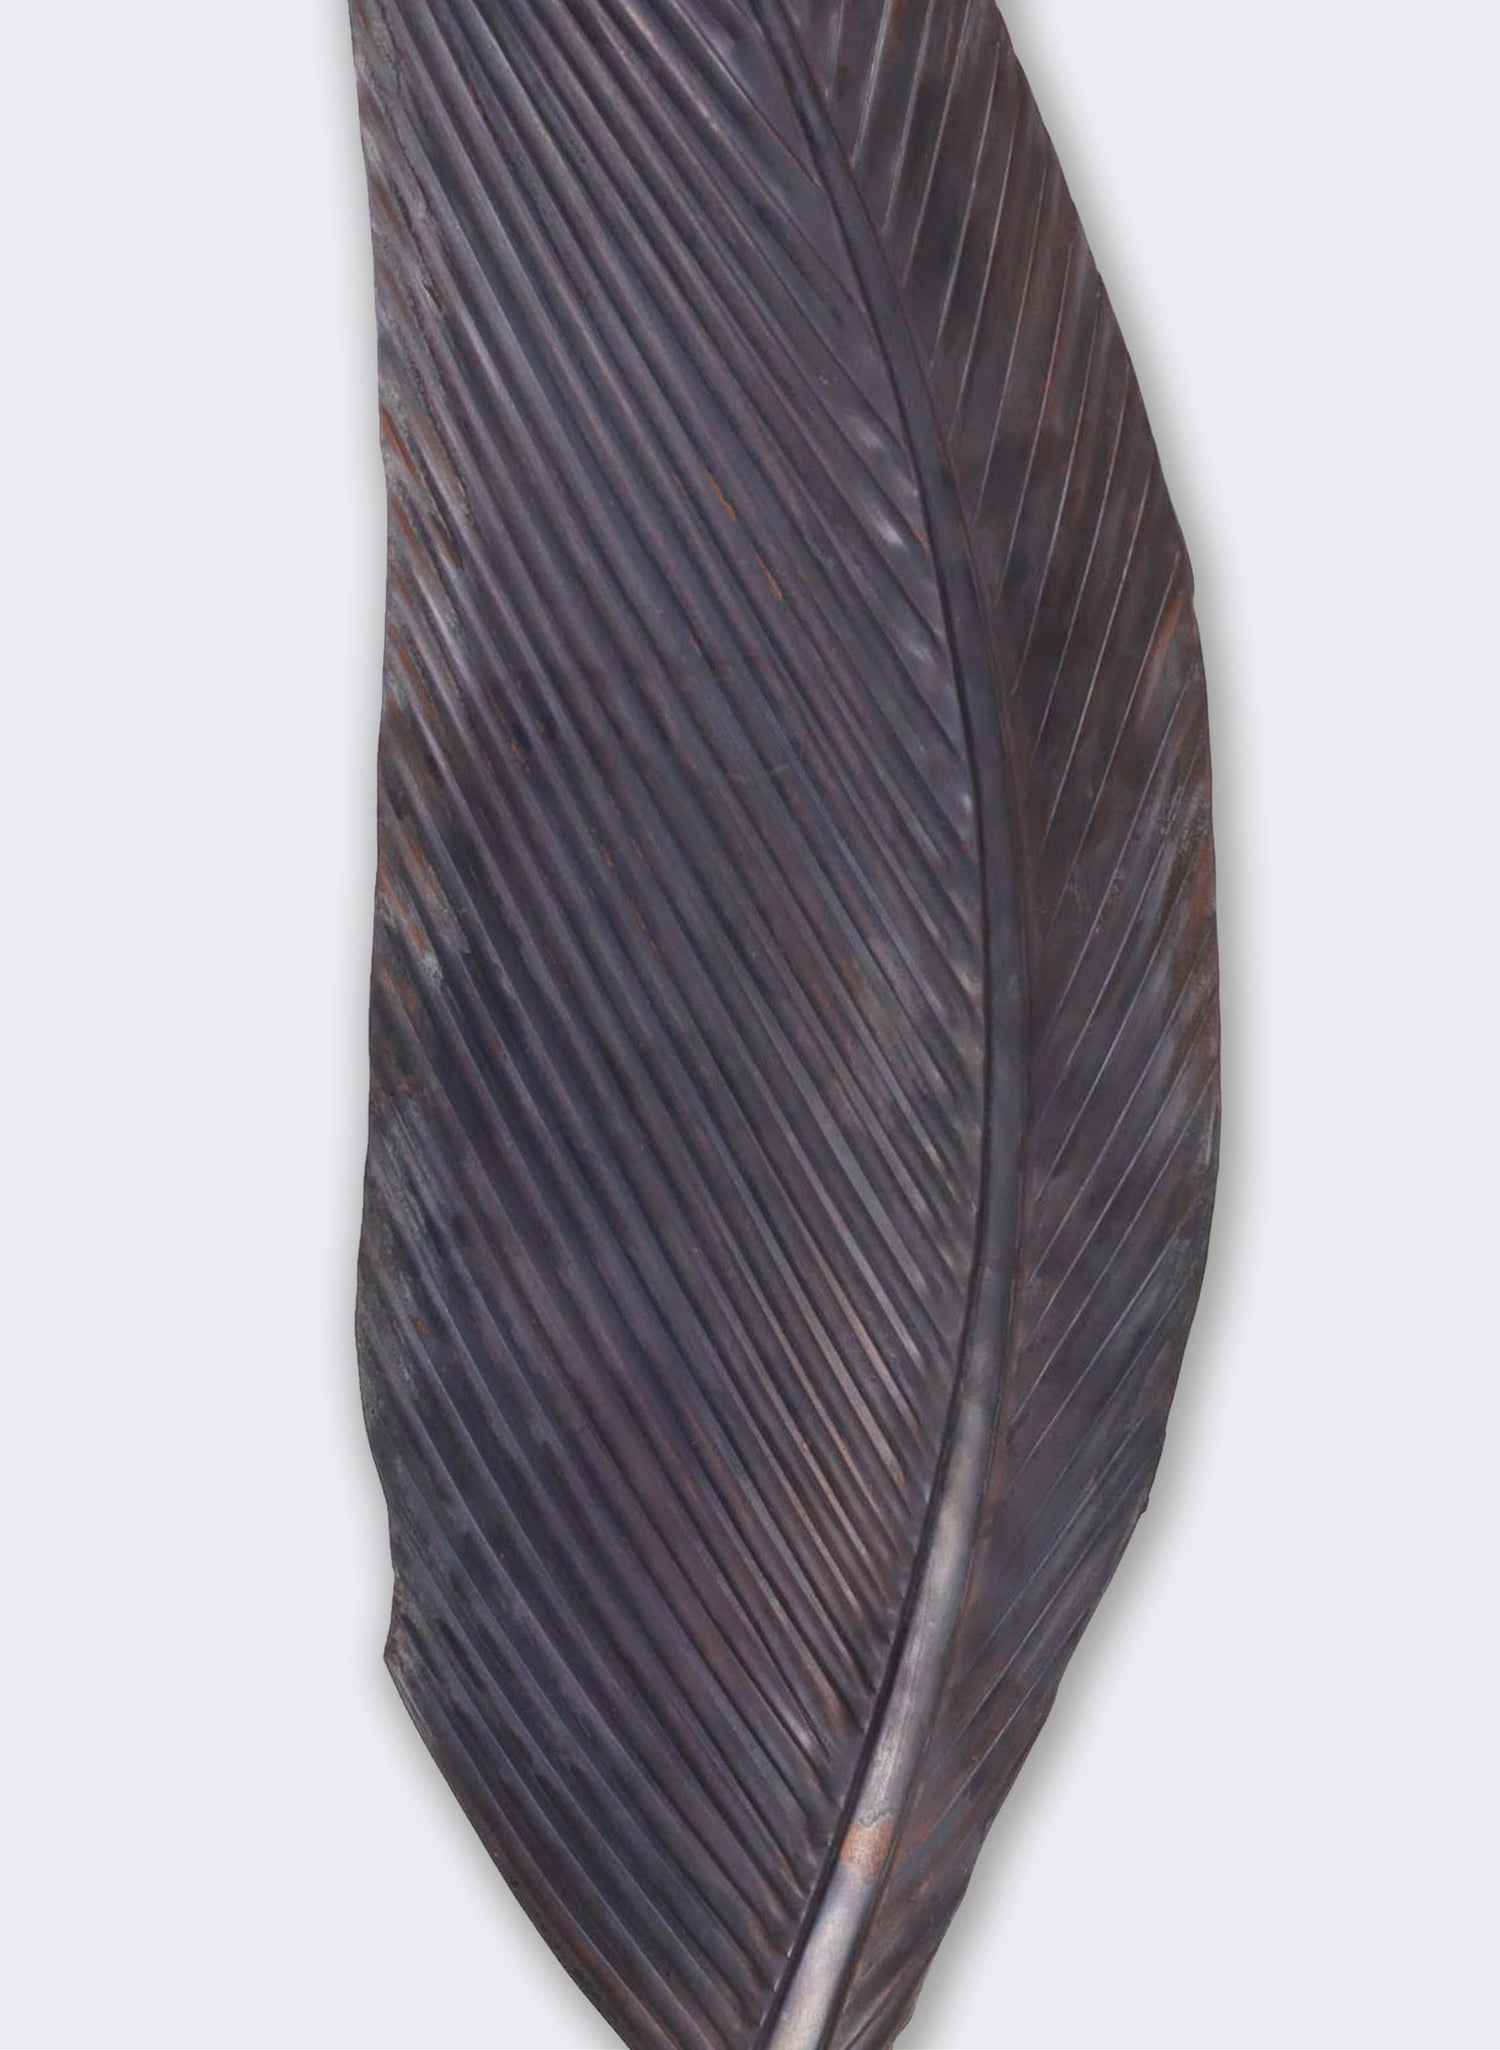 Tui Feather 603mm - Black Patina Copper